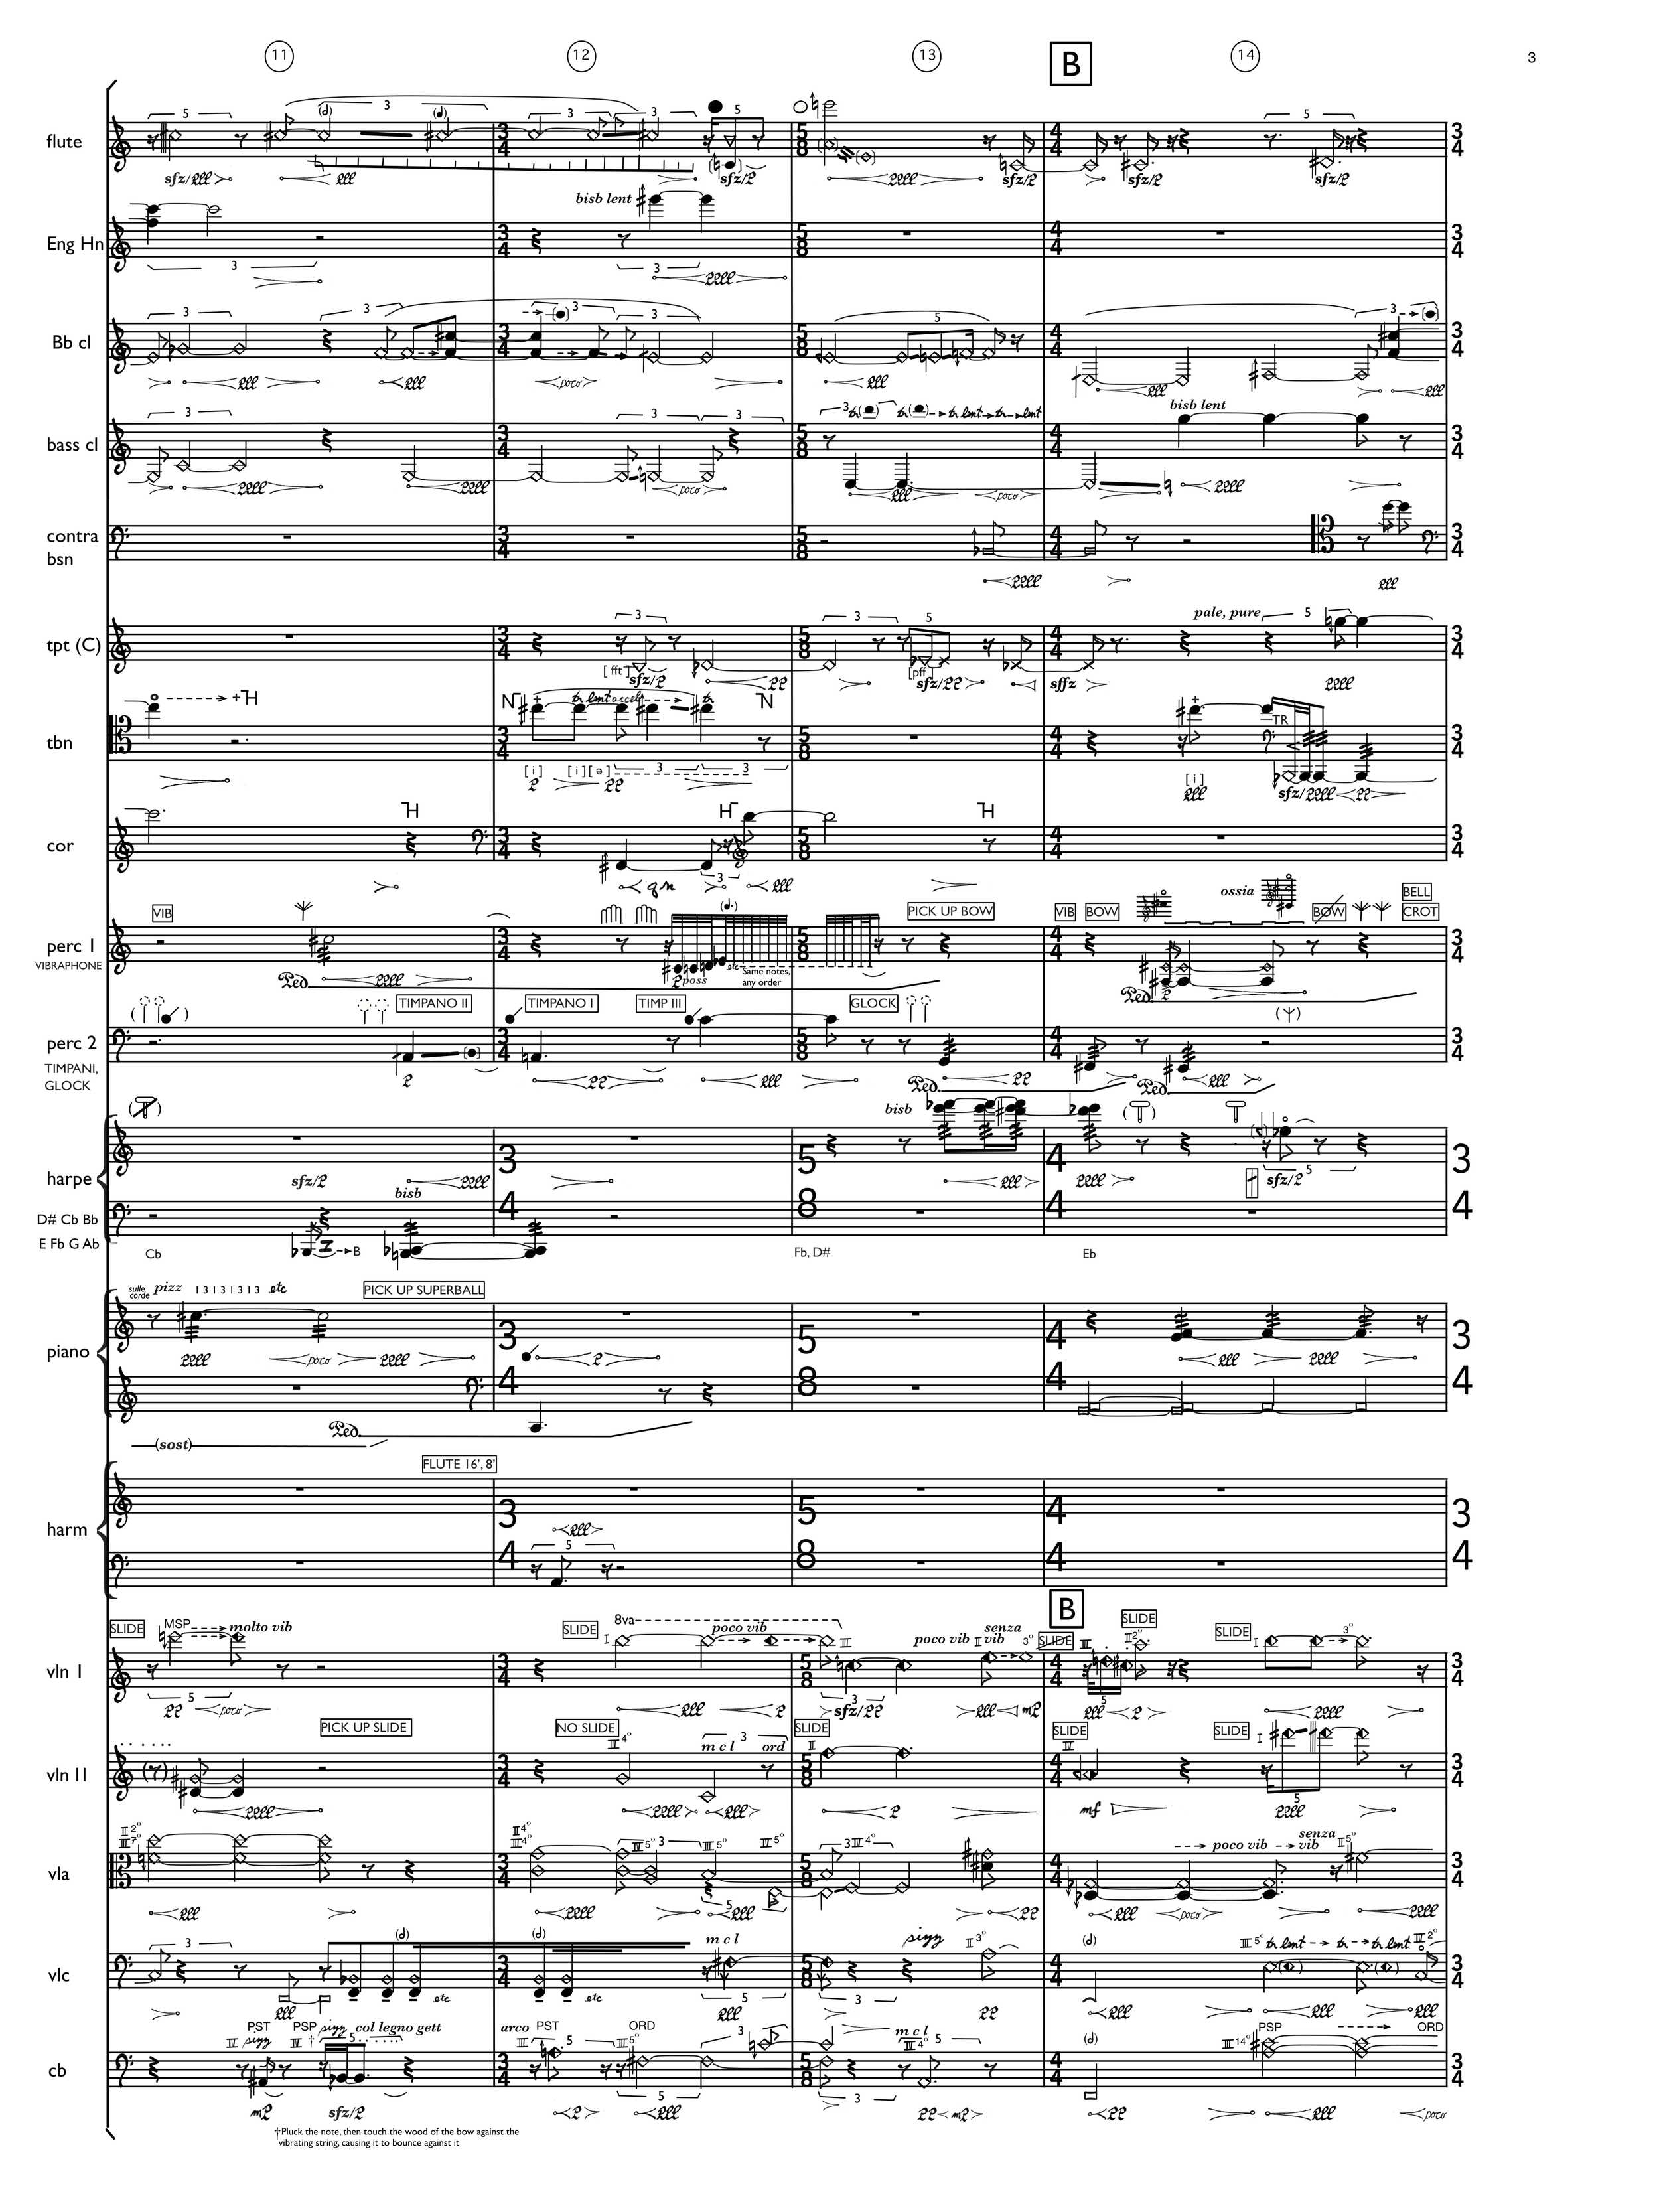 Alessandrini-Abhanden-00-score-notes-03.png